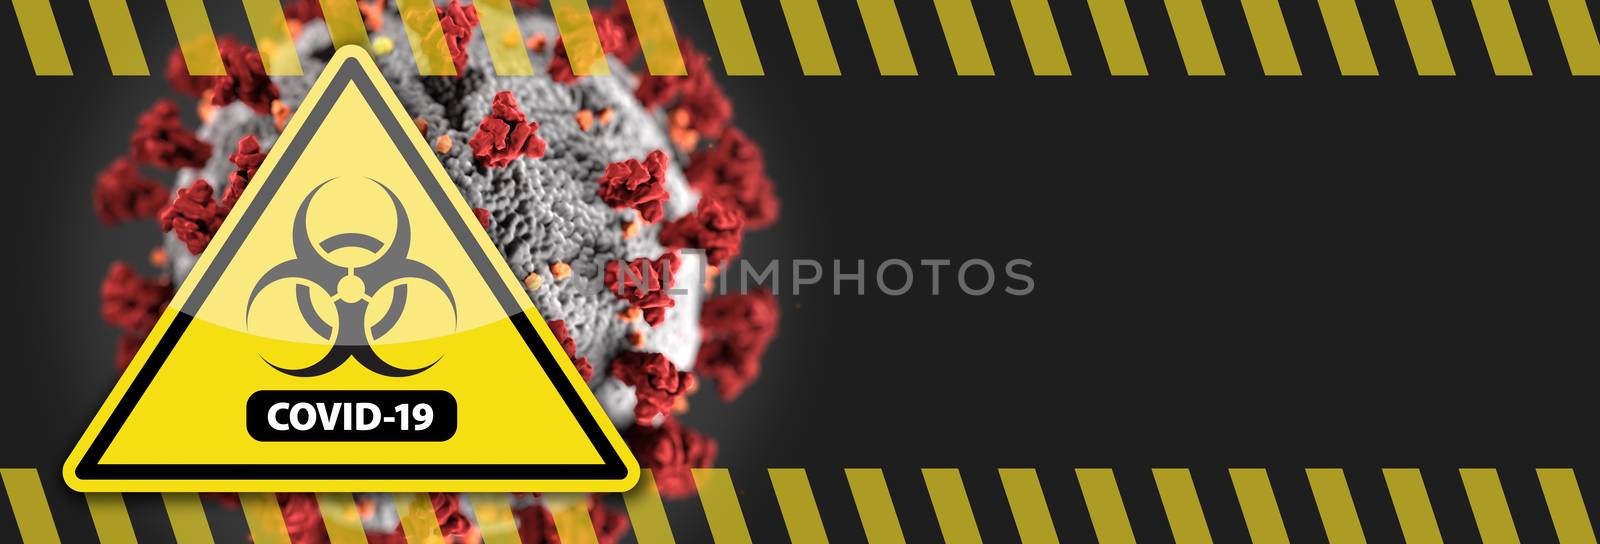 Banner of Coronavirus COVID-19 Bio-hazard Warning Sign with Virus Illustration Behind.